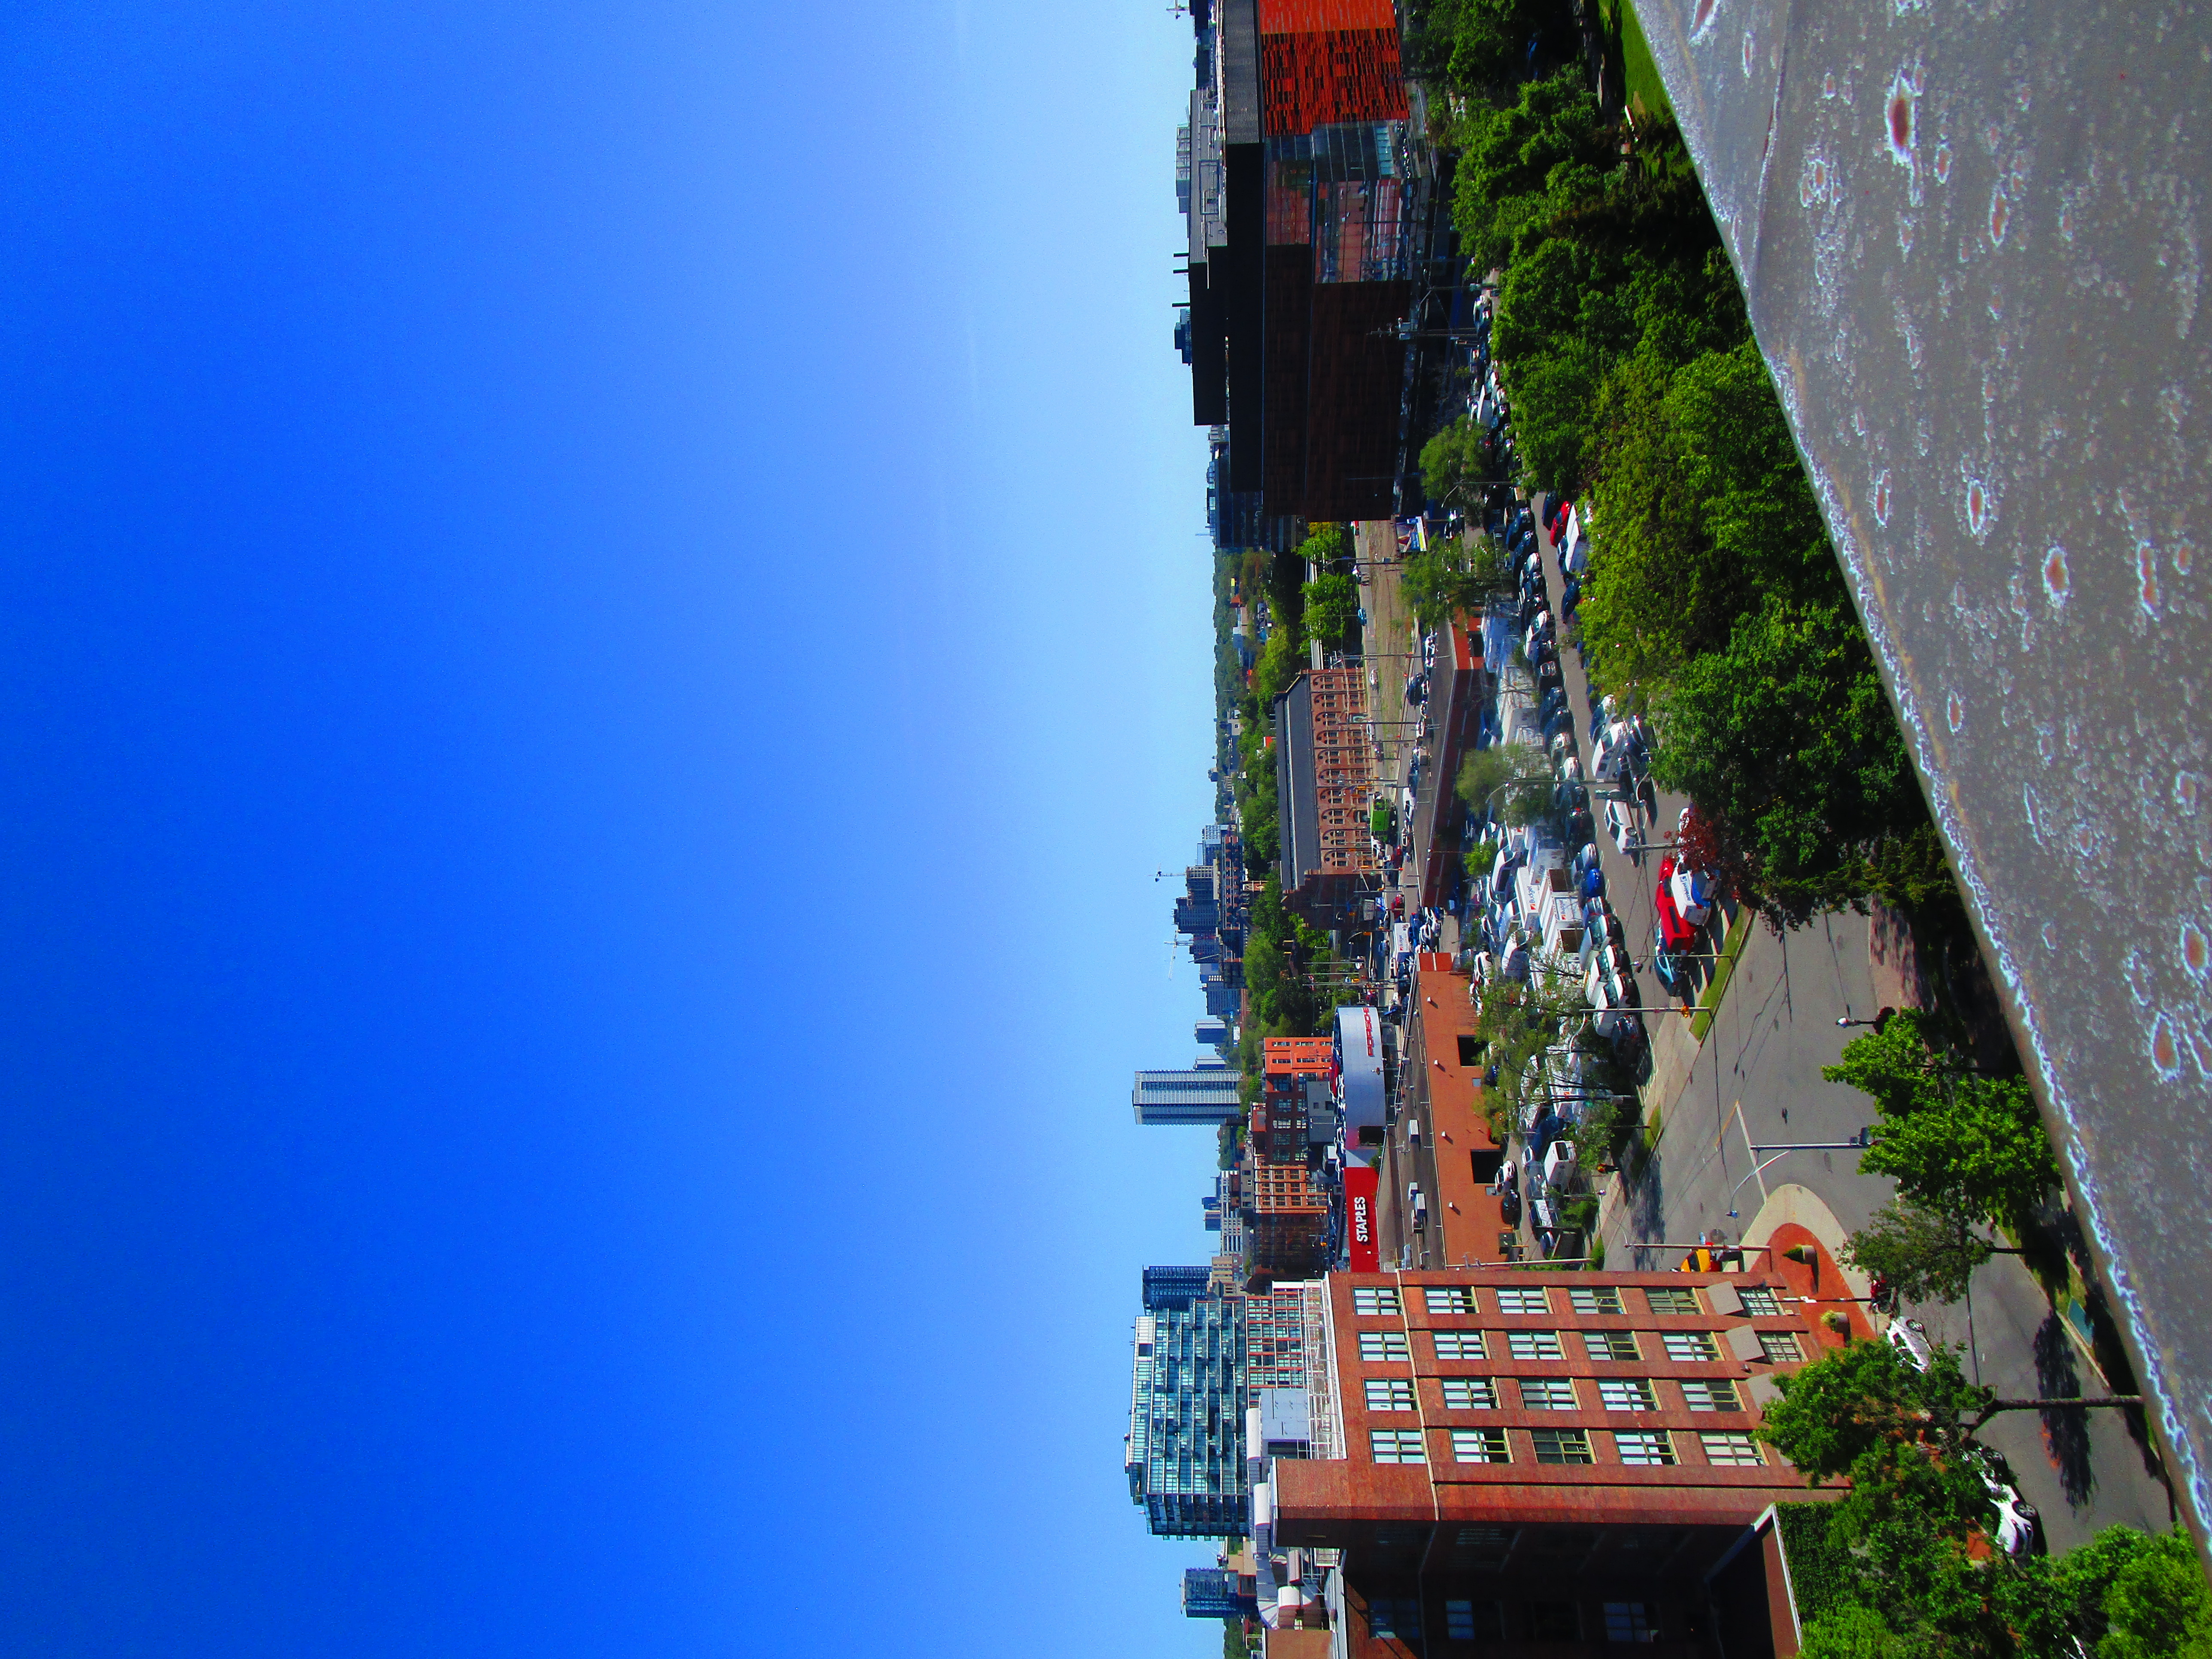 Scanning toronto skyline a 2017 06 07 -ag photo